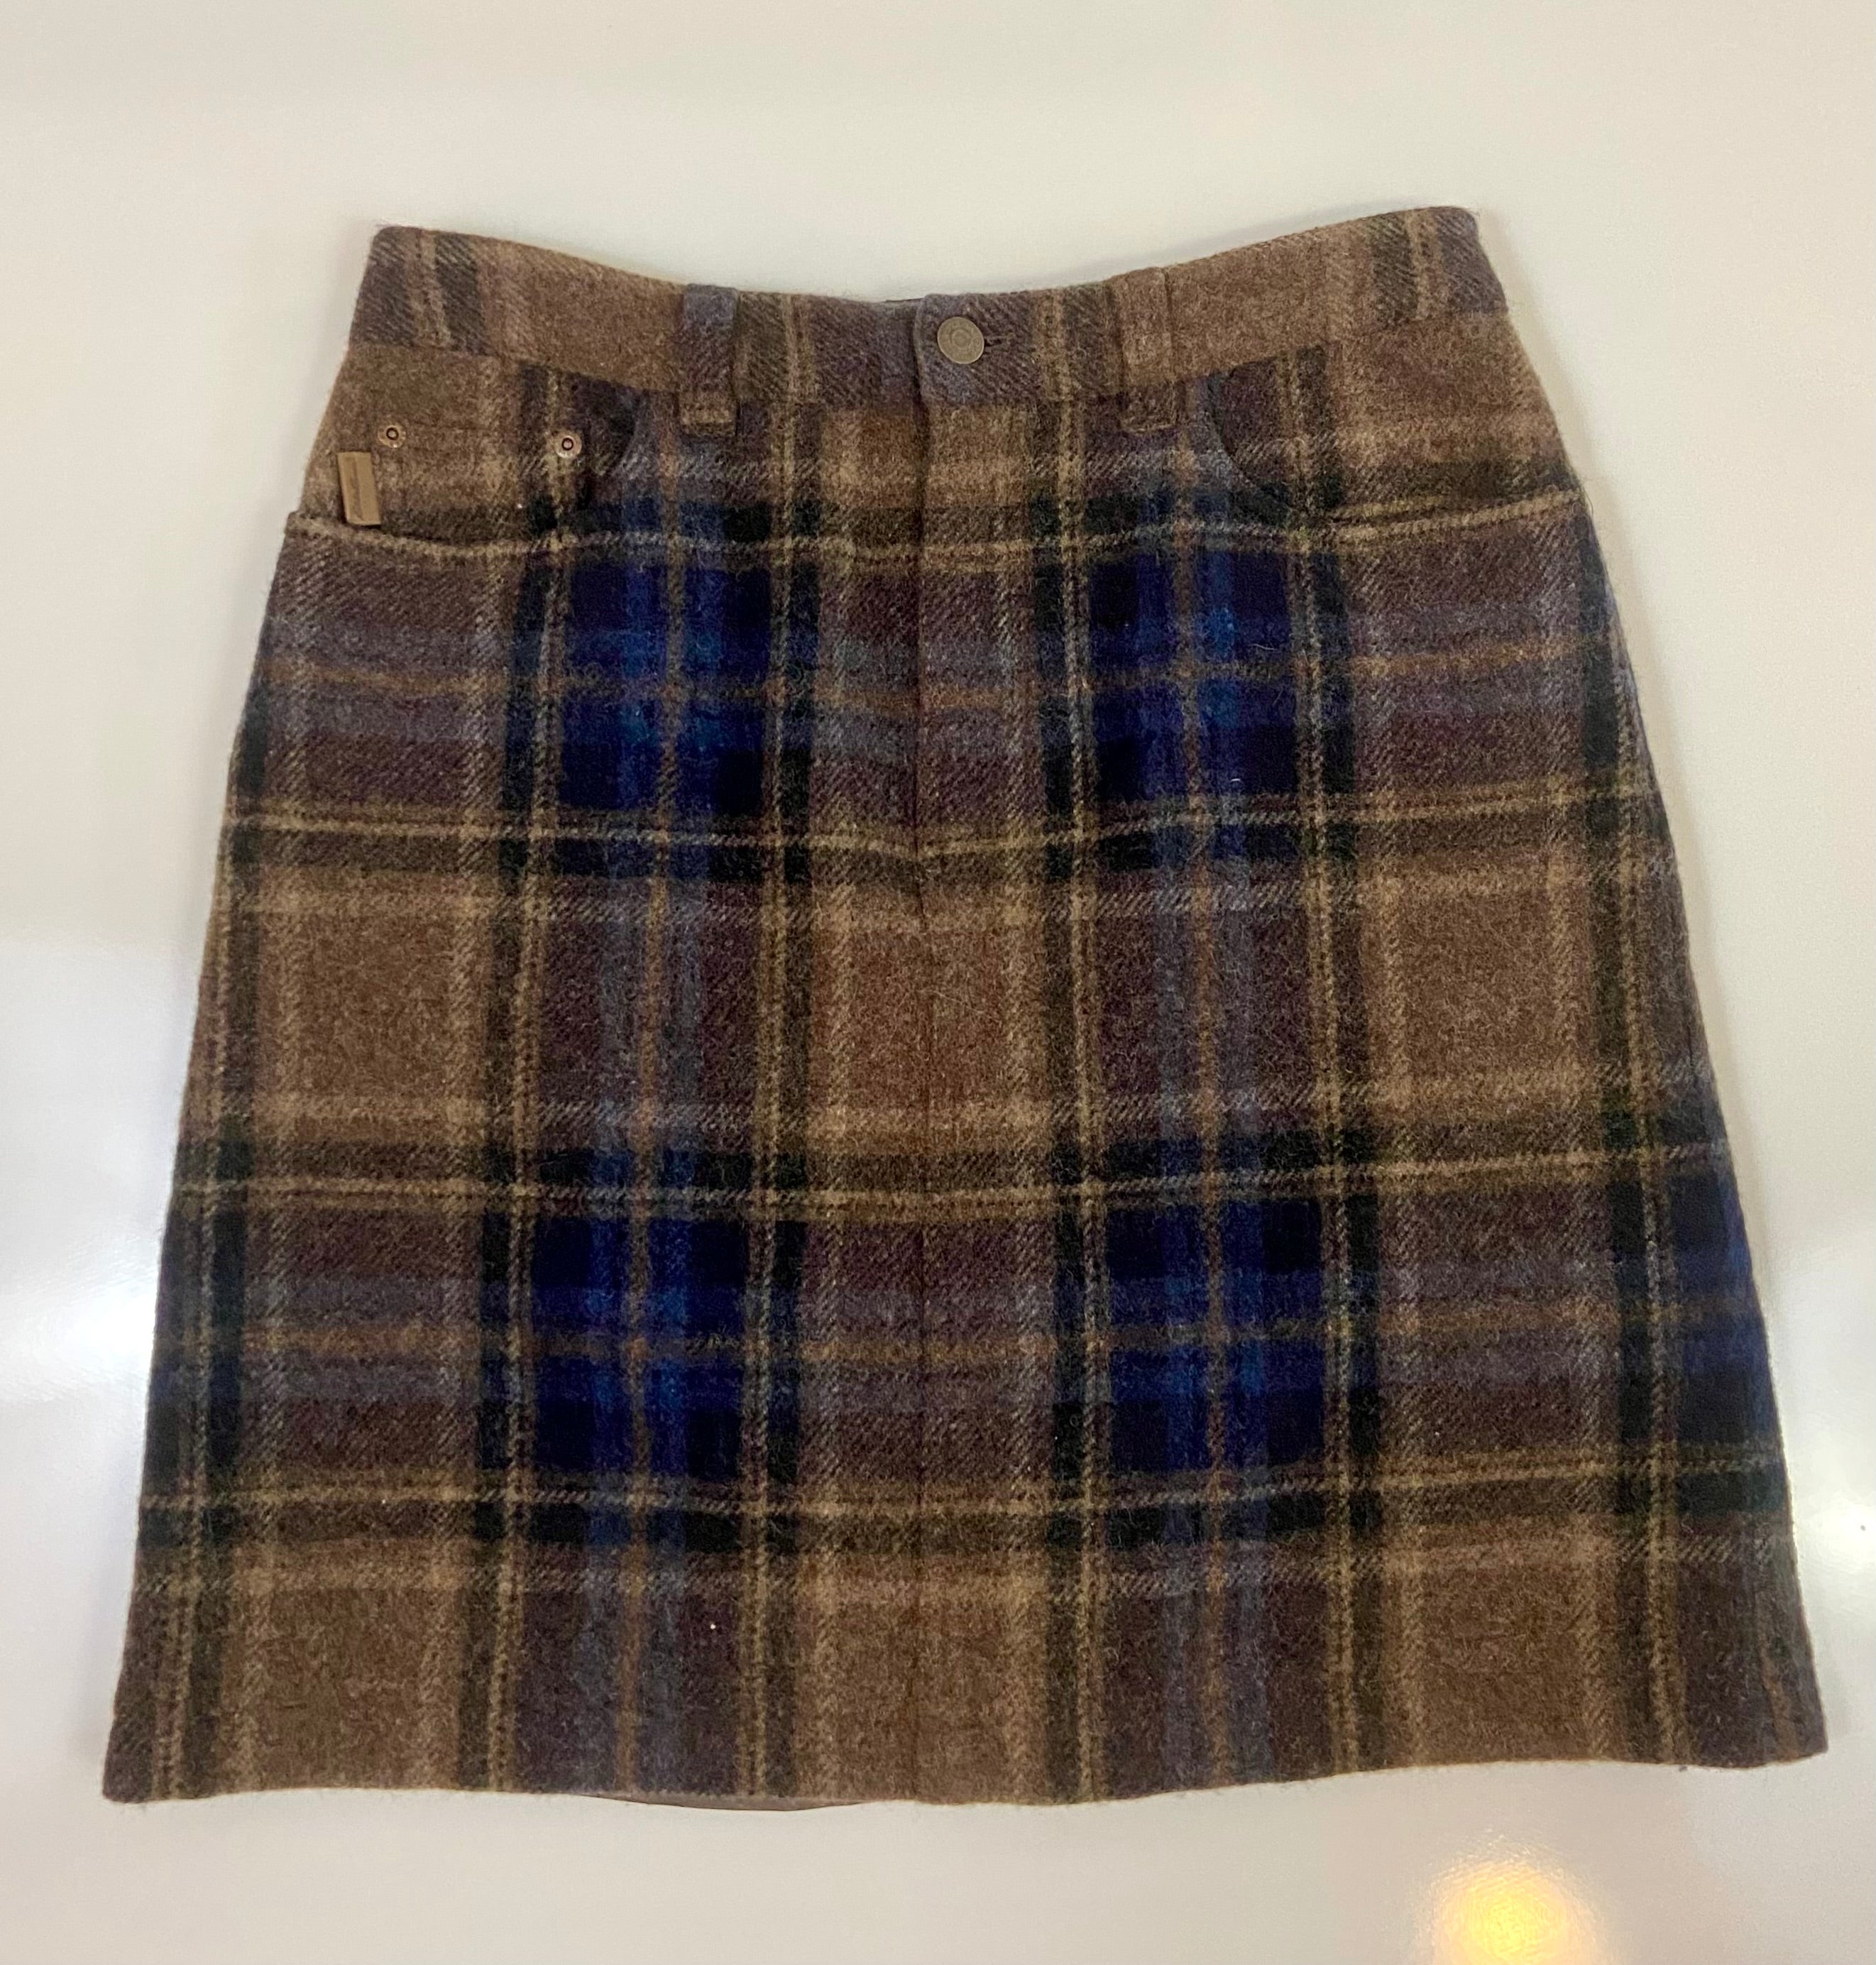 Eddie Bauer Plaid Wool Skirt